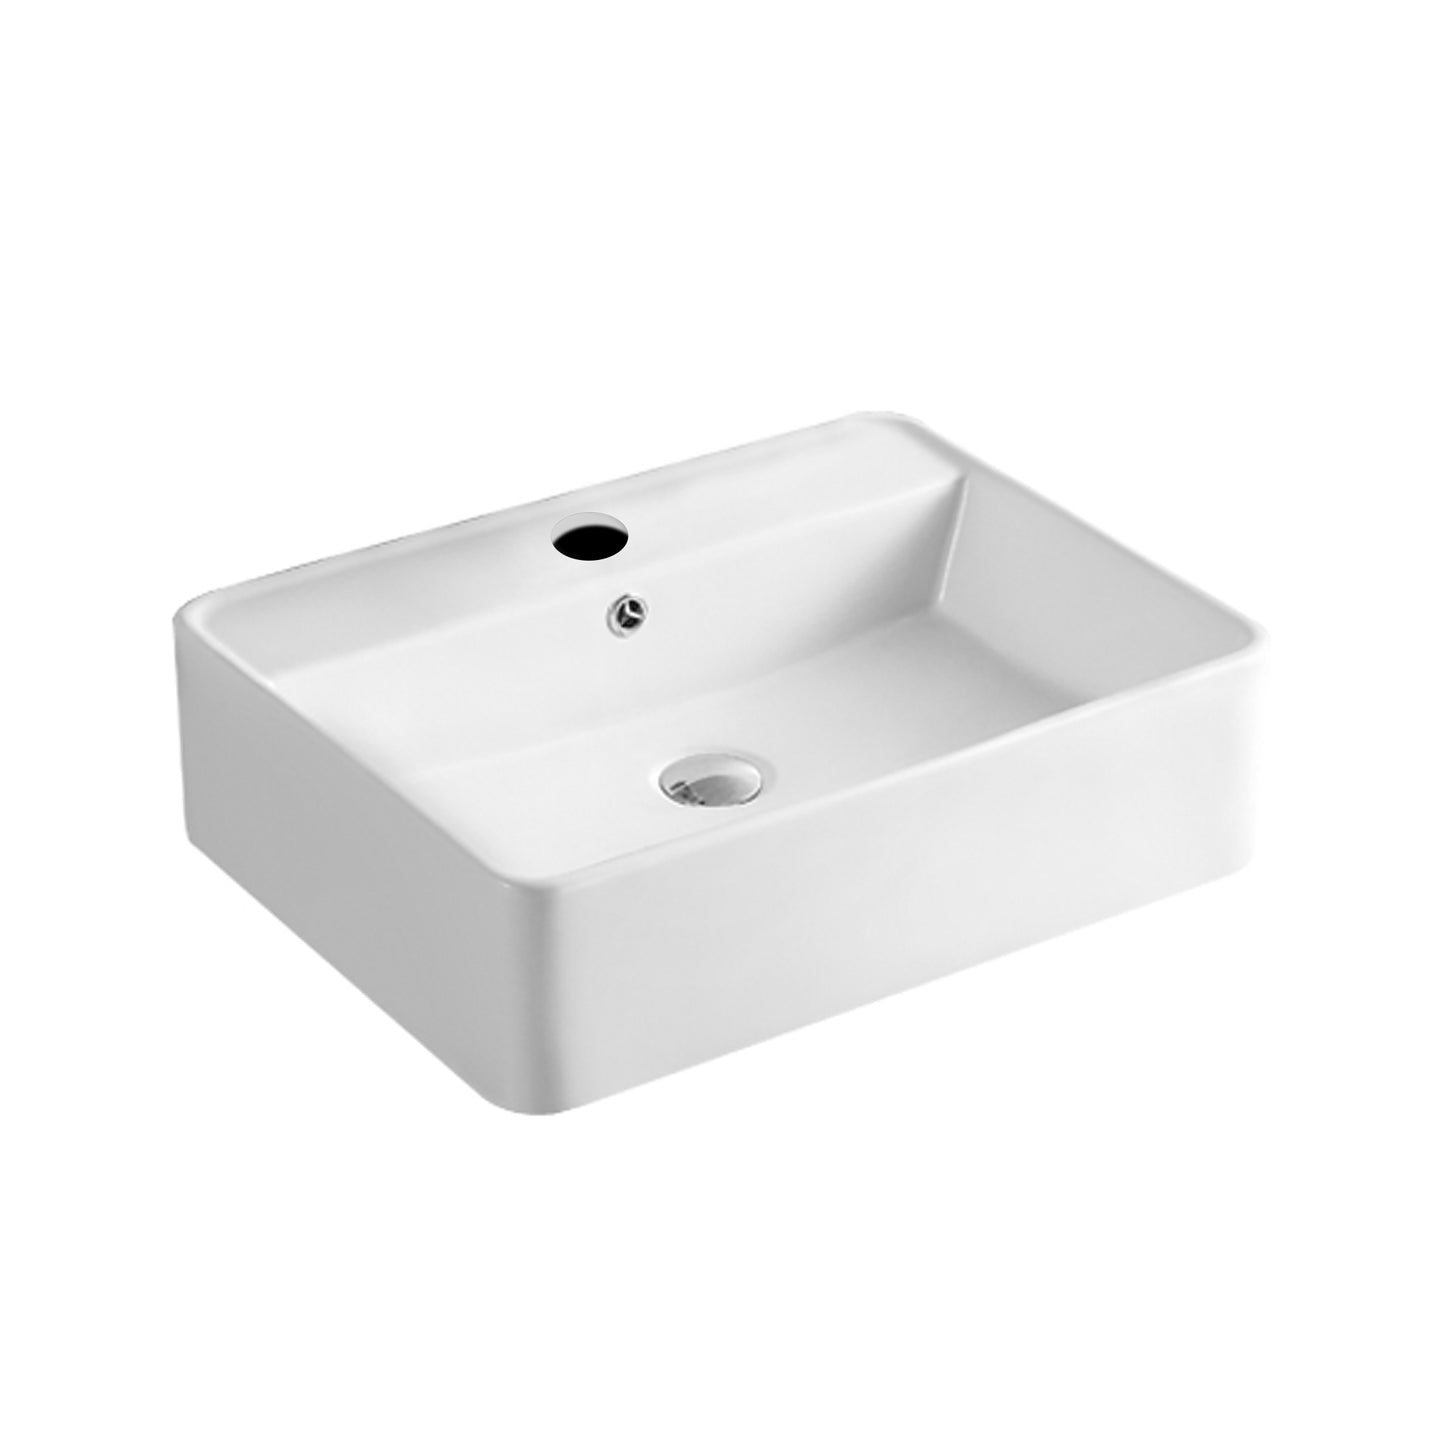 58.5cm x 45cm Ceramic Basin Bathroom Wash Counter Top Hand Wash Bowl Sink Vanity Above Basins